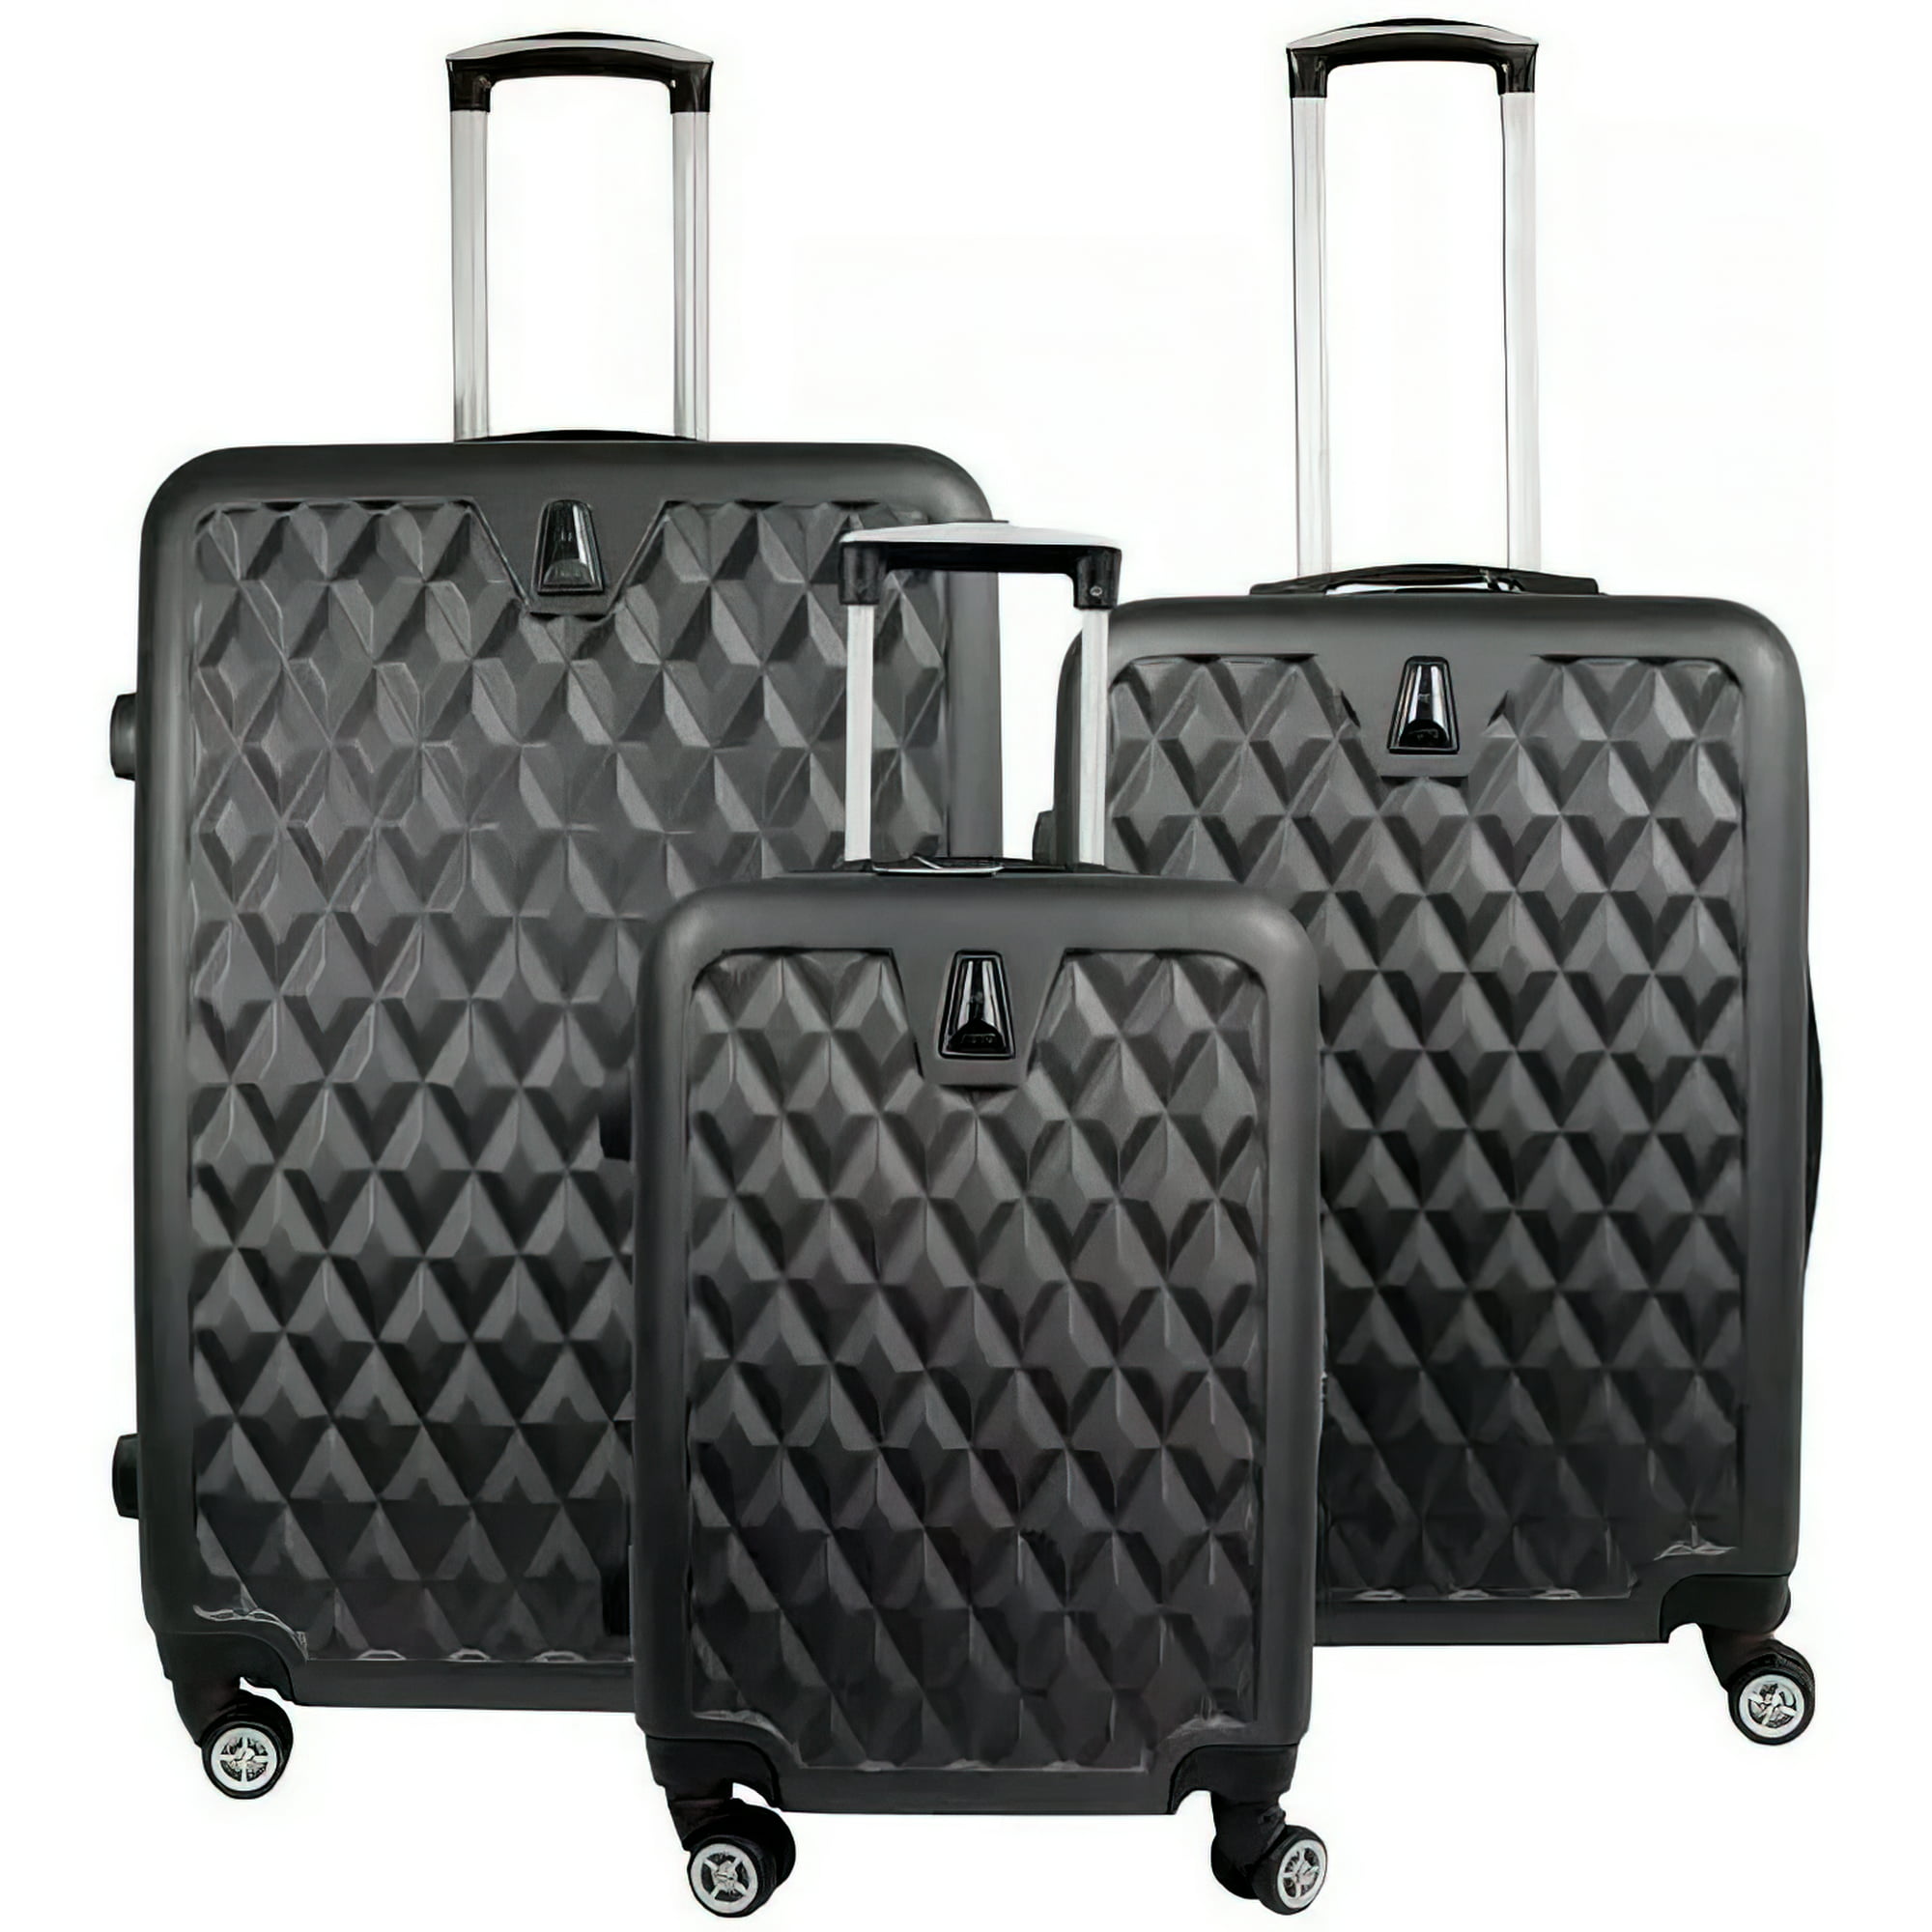 TectakeSet de 3 maletas trolley rígidas - maletas de viaje carcasa dura,  pack de maletas